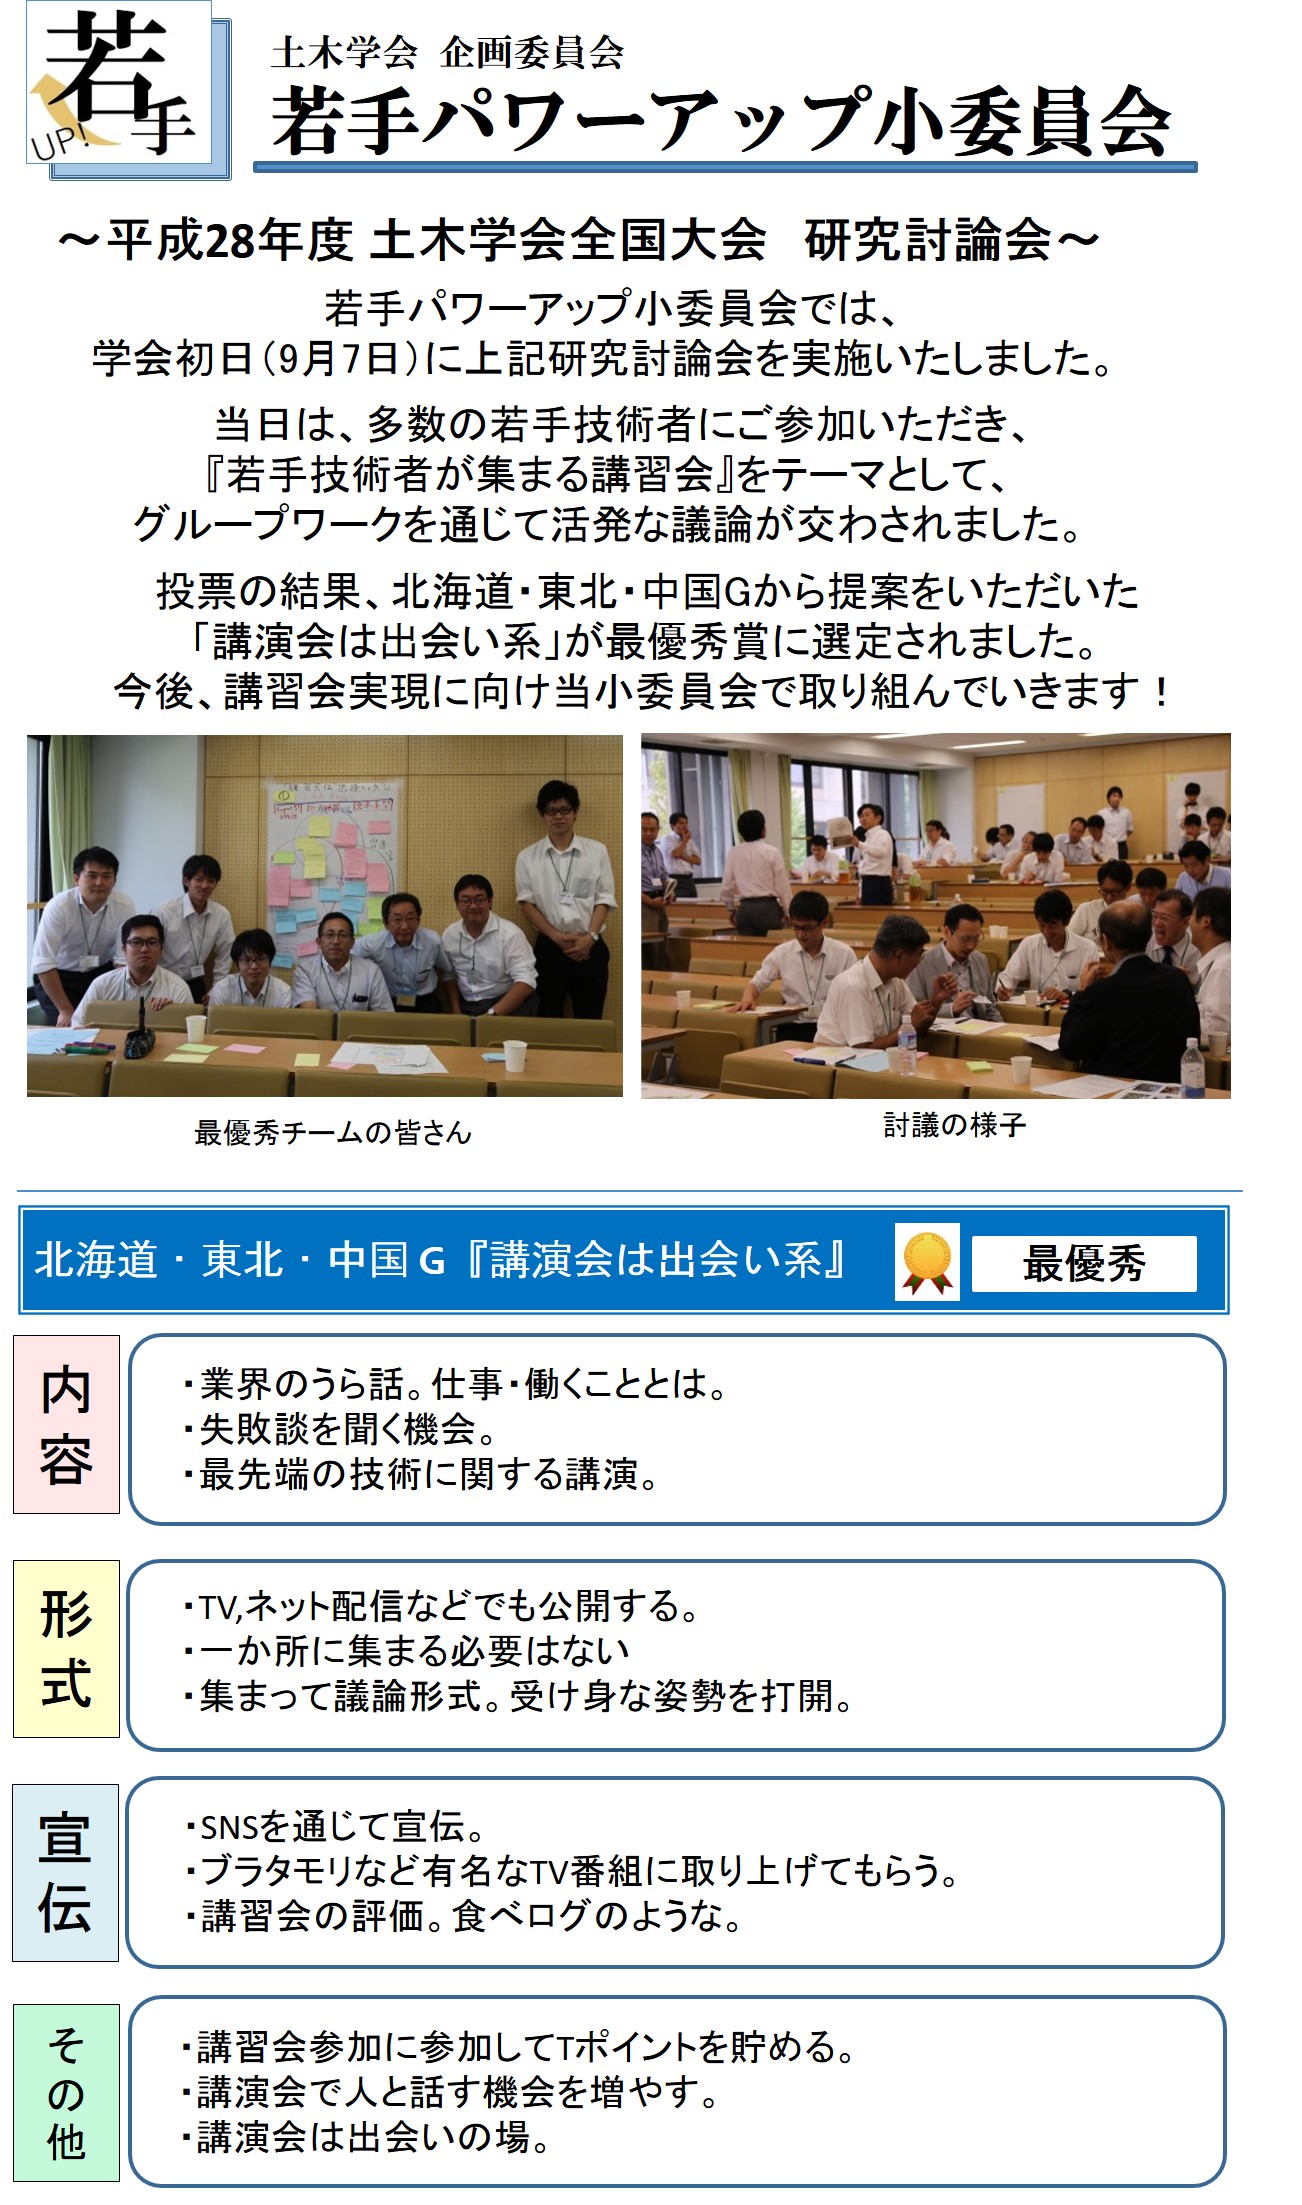 http://committees.jsce.or.jp/kikaku03/system/files/wakateactivity-3.jpg